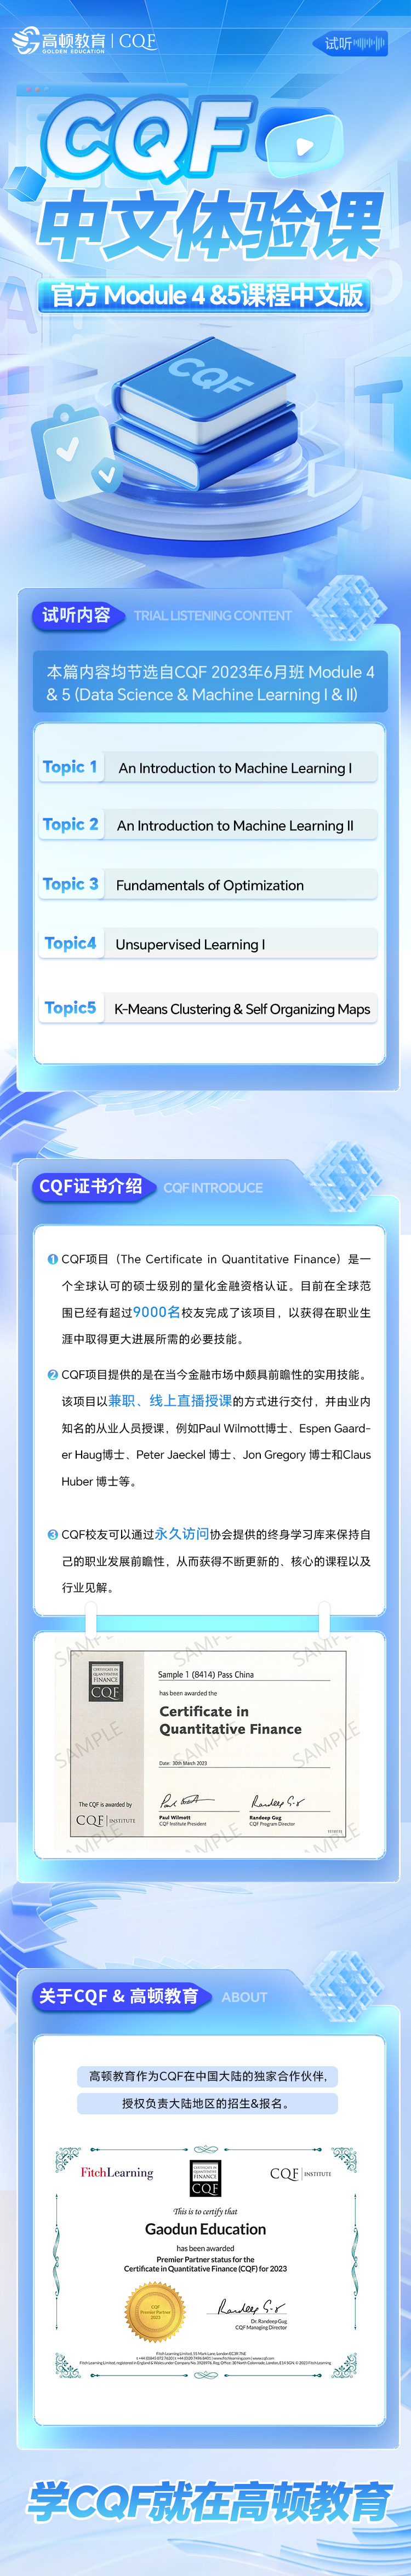 https://simg01.gaodunwangxiao.com/uploadfiles/product-center/202401/04/d1dcf_20240104100302.jpg